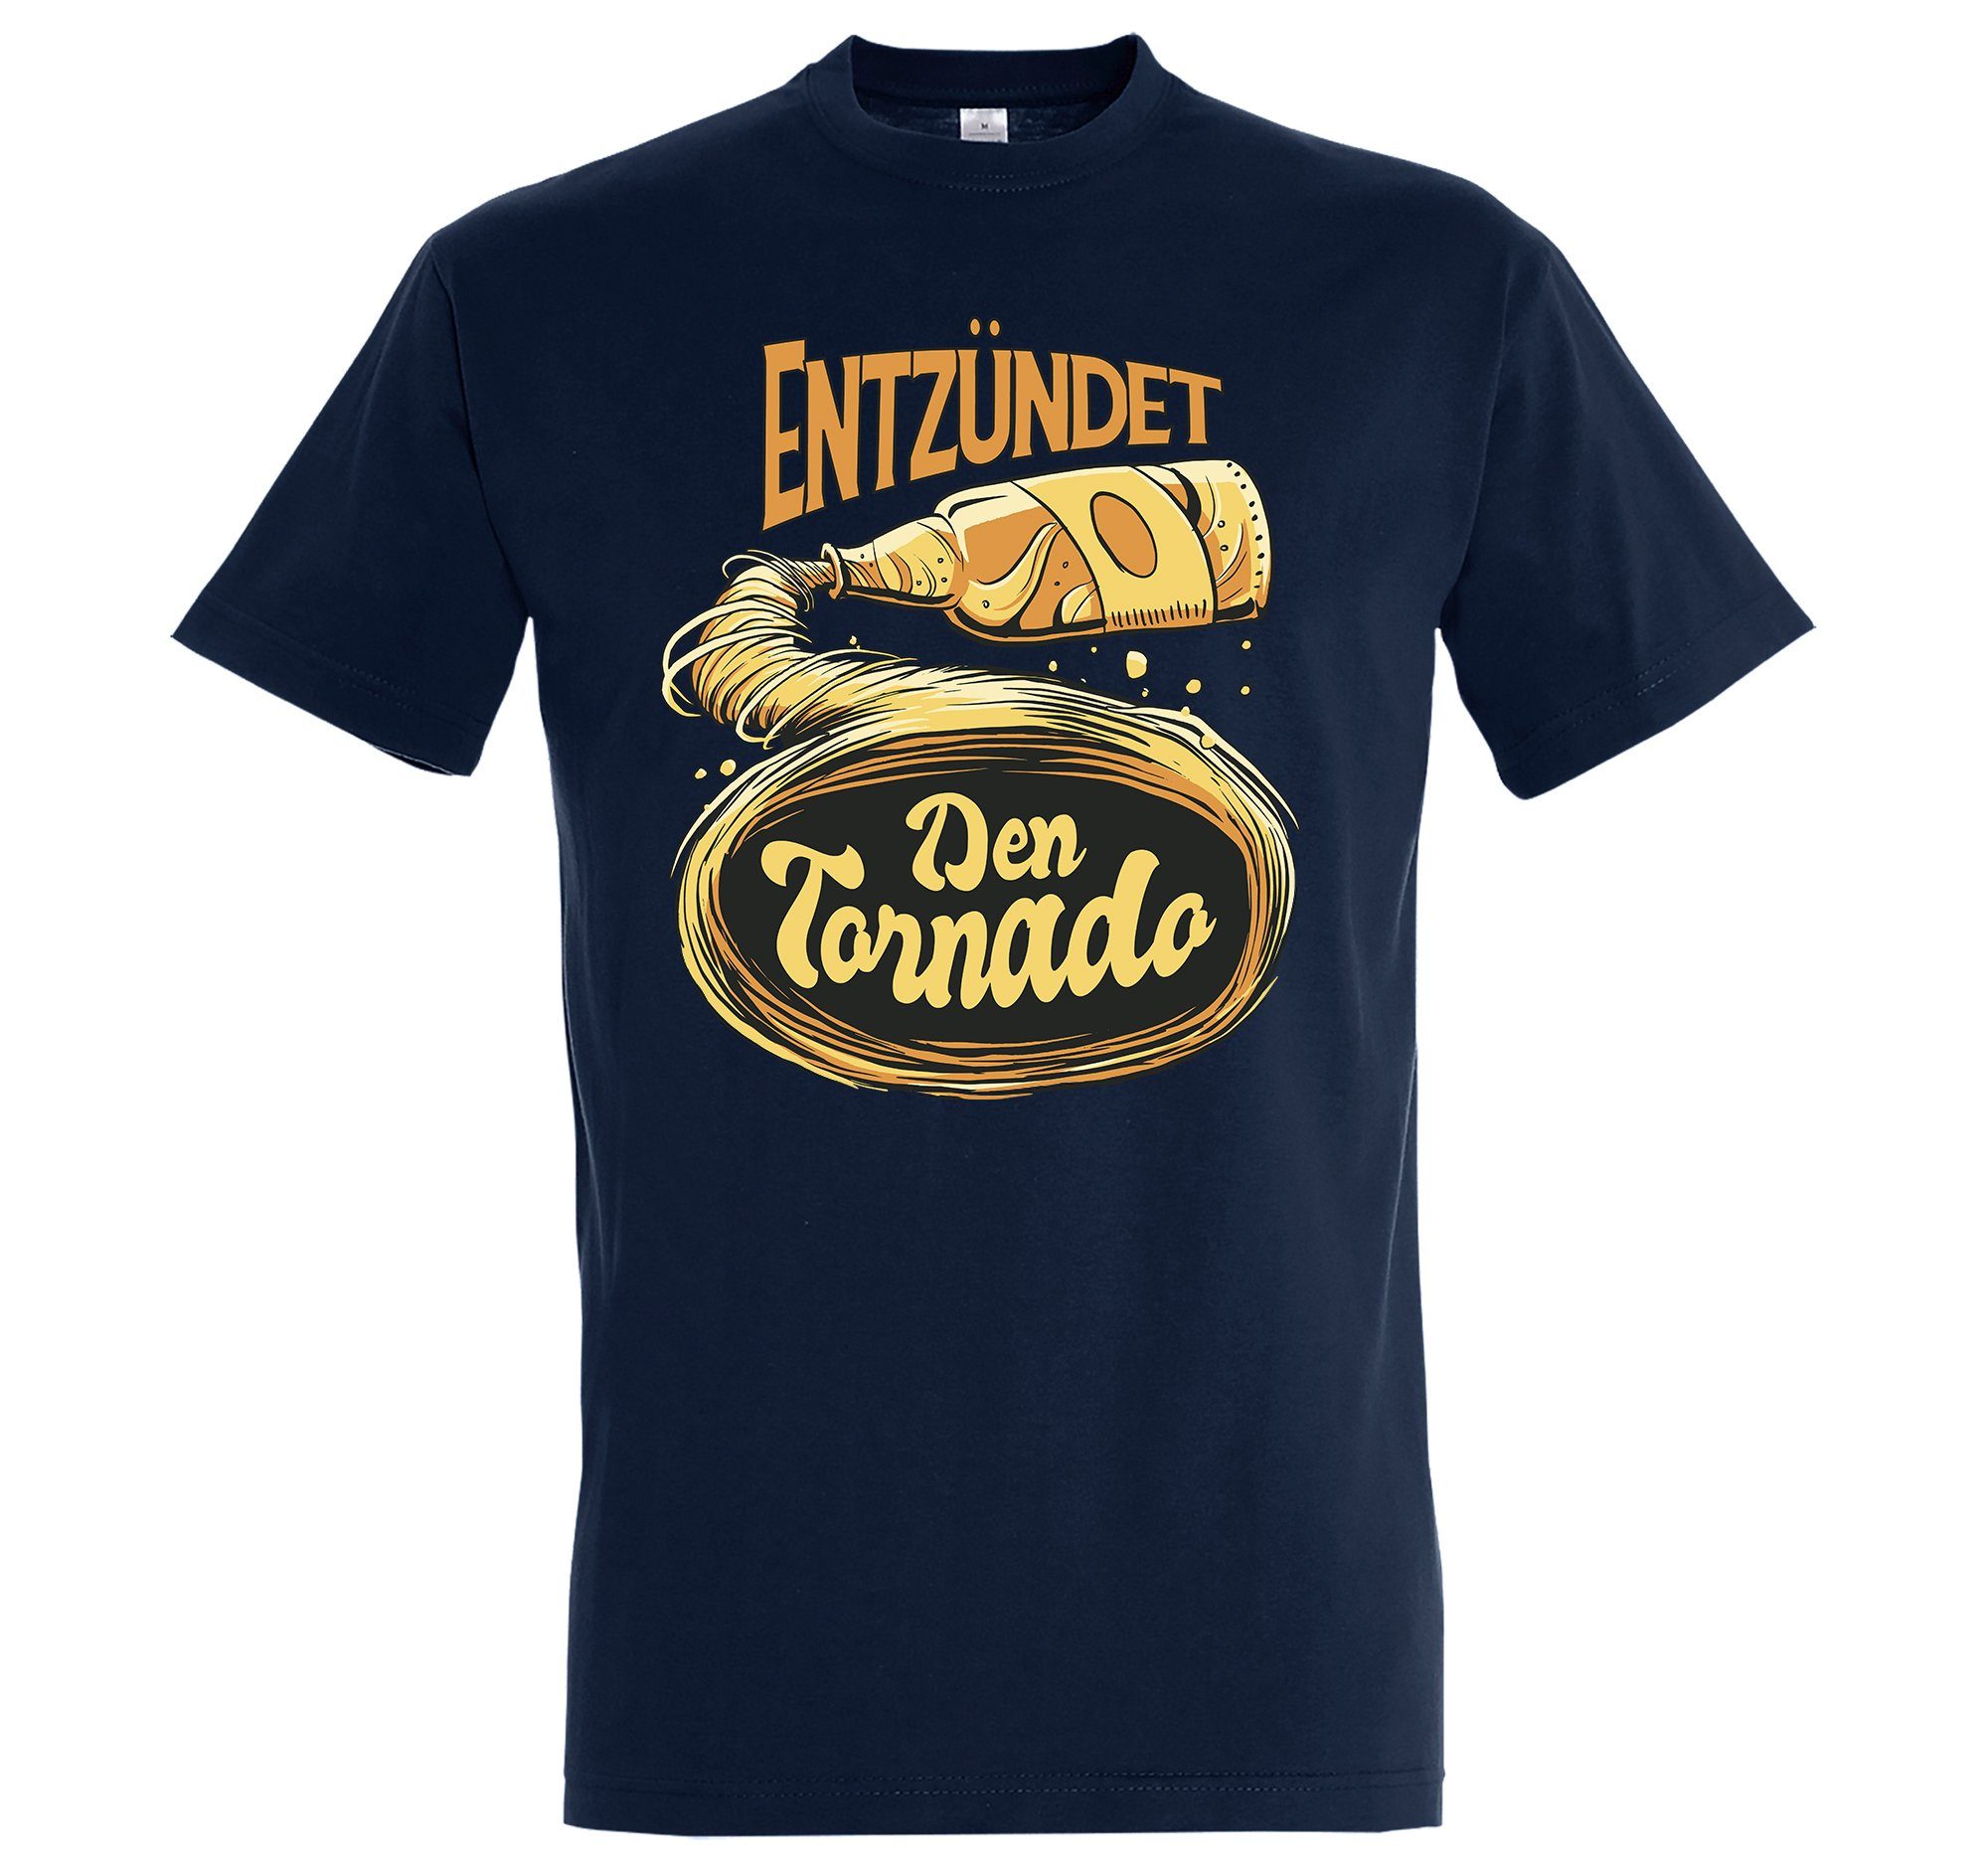 Tornado! Shirt Frontprint Bier mit Designz T-Shirt Den trendigem Entzündet Herren Navyblau Youth